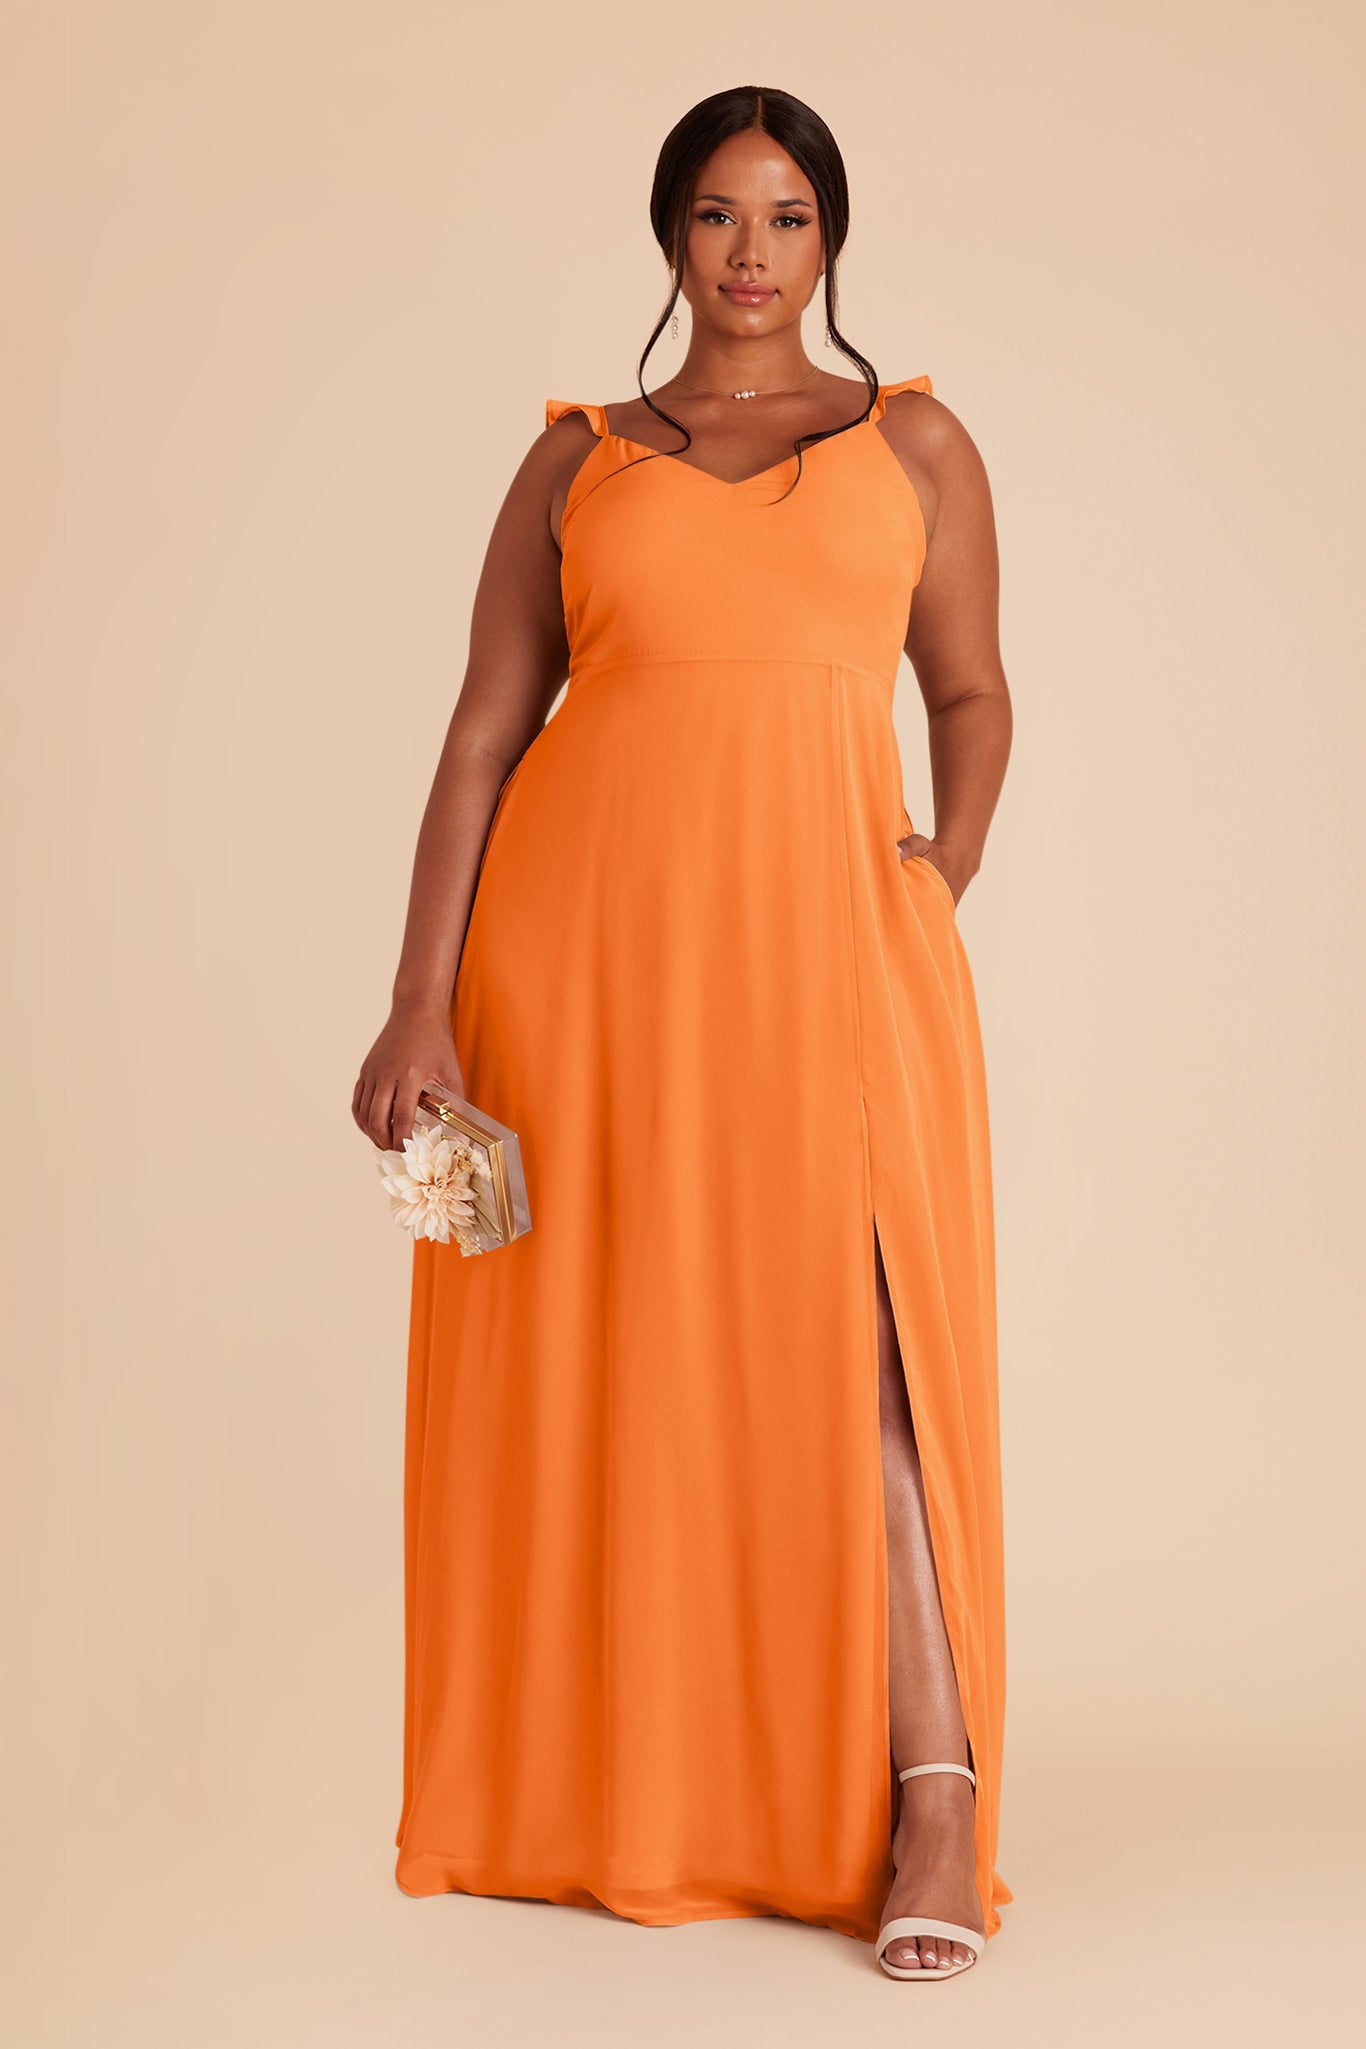 Apricot Doris Chiffon Dress by Birdy Grey